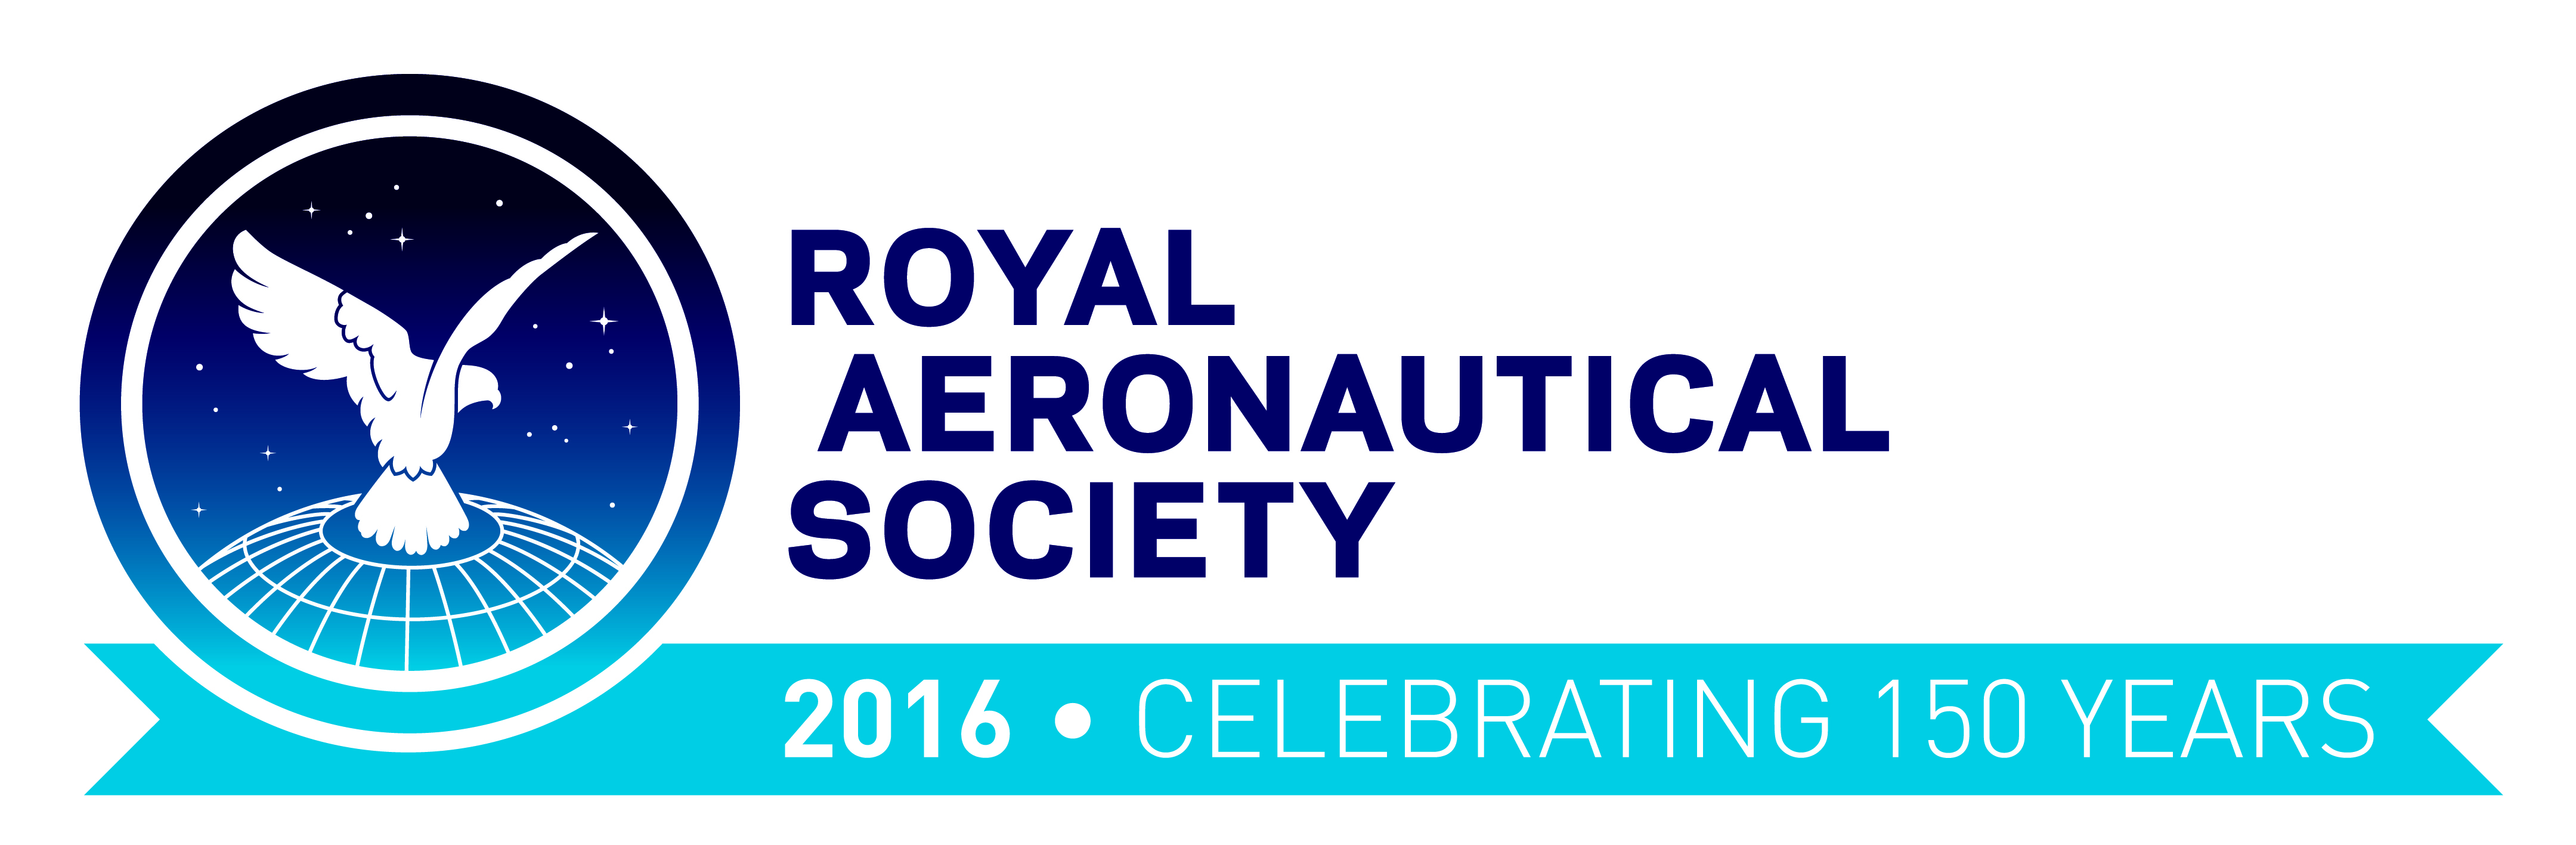 Royal Aeronautical Society 150 years